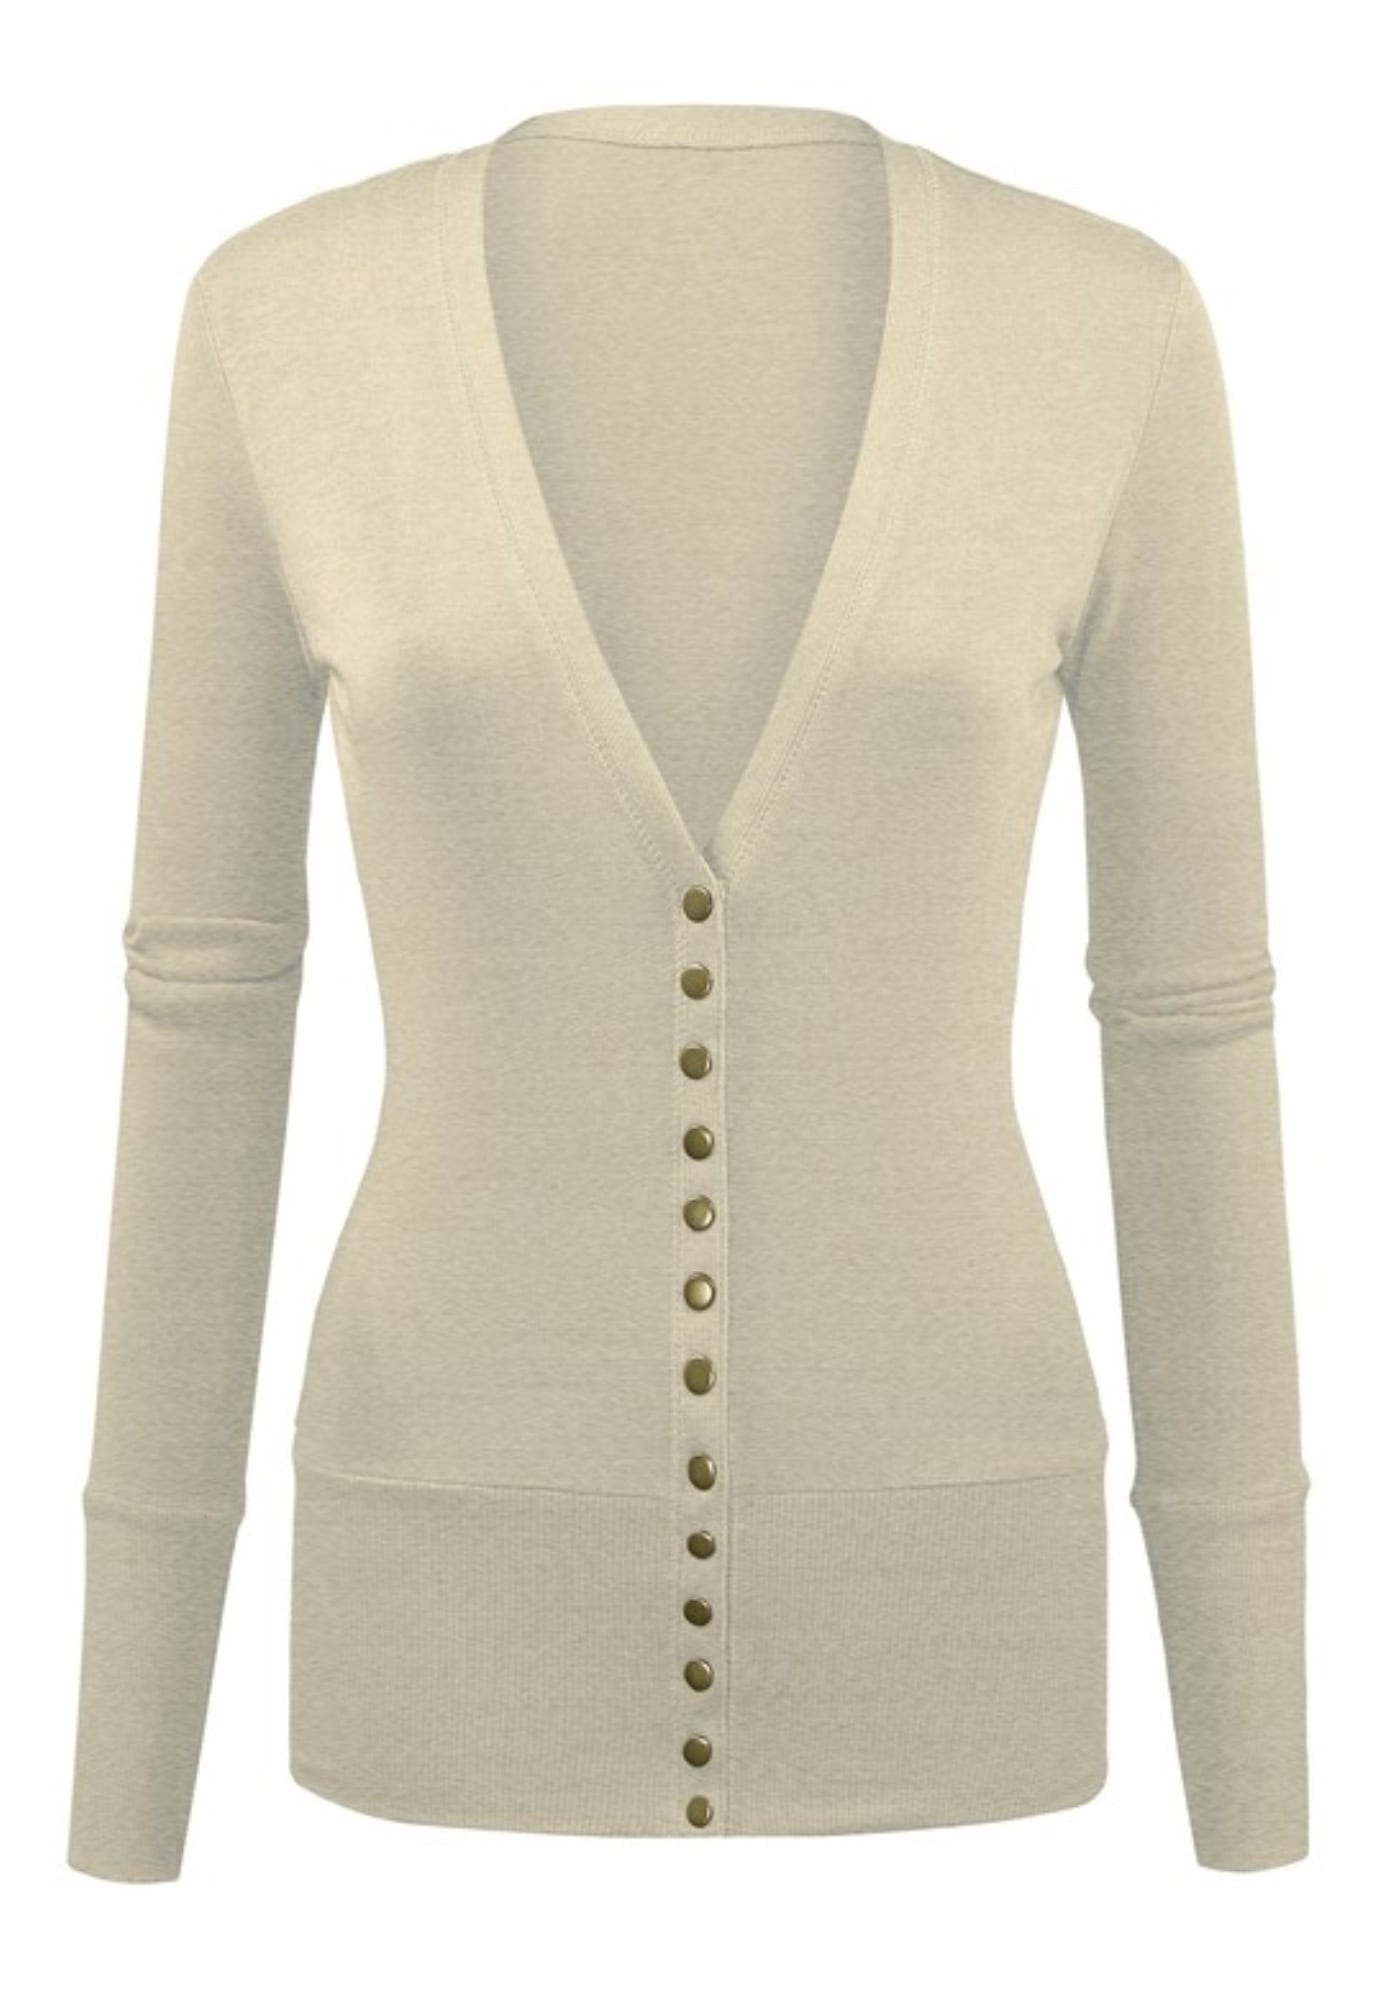 Long Sleeve Snap Button Cardigan - $0.00 - KoaJoa.com